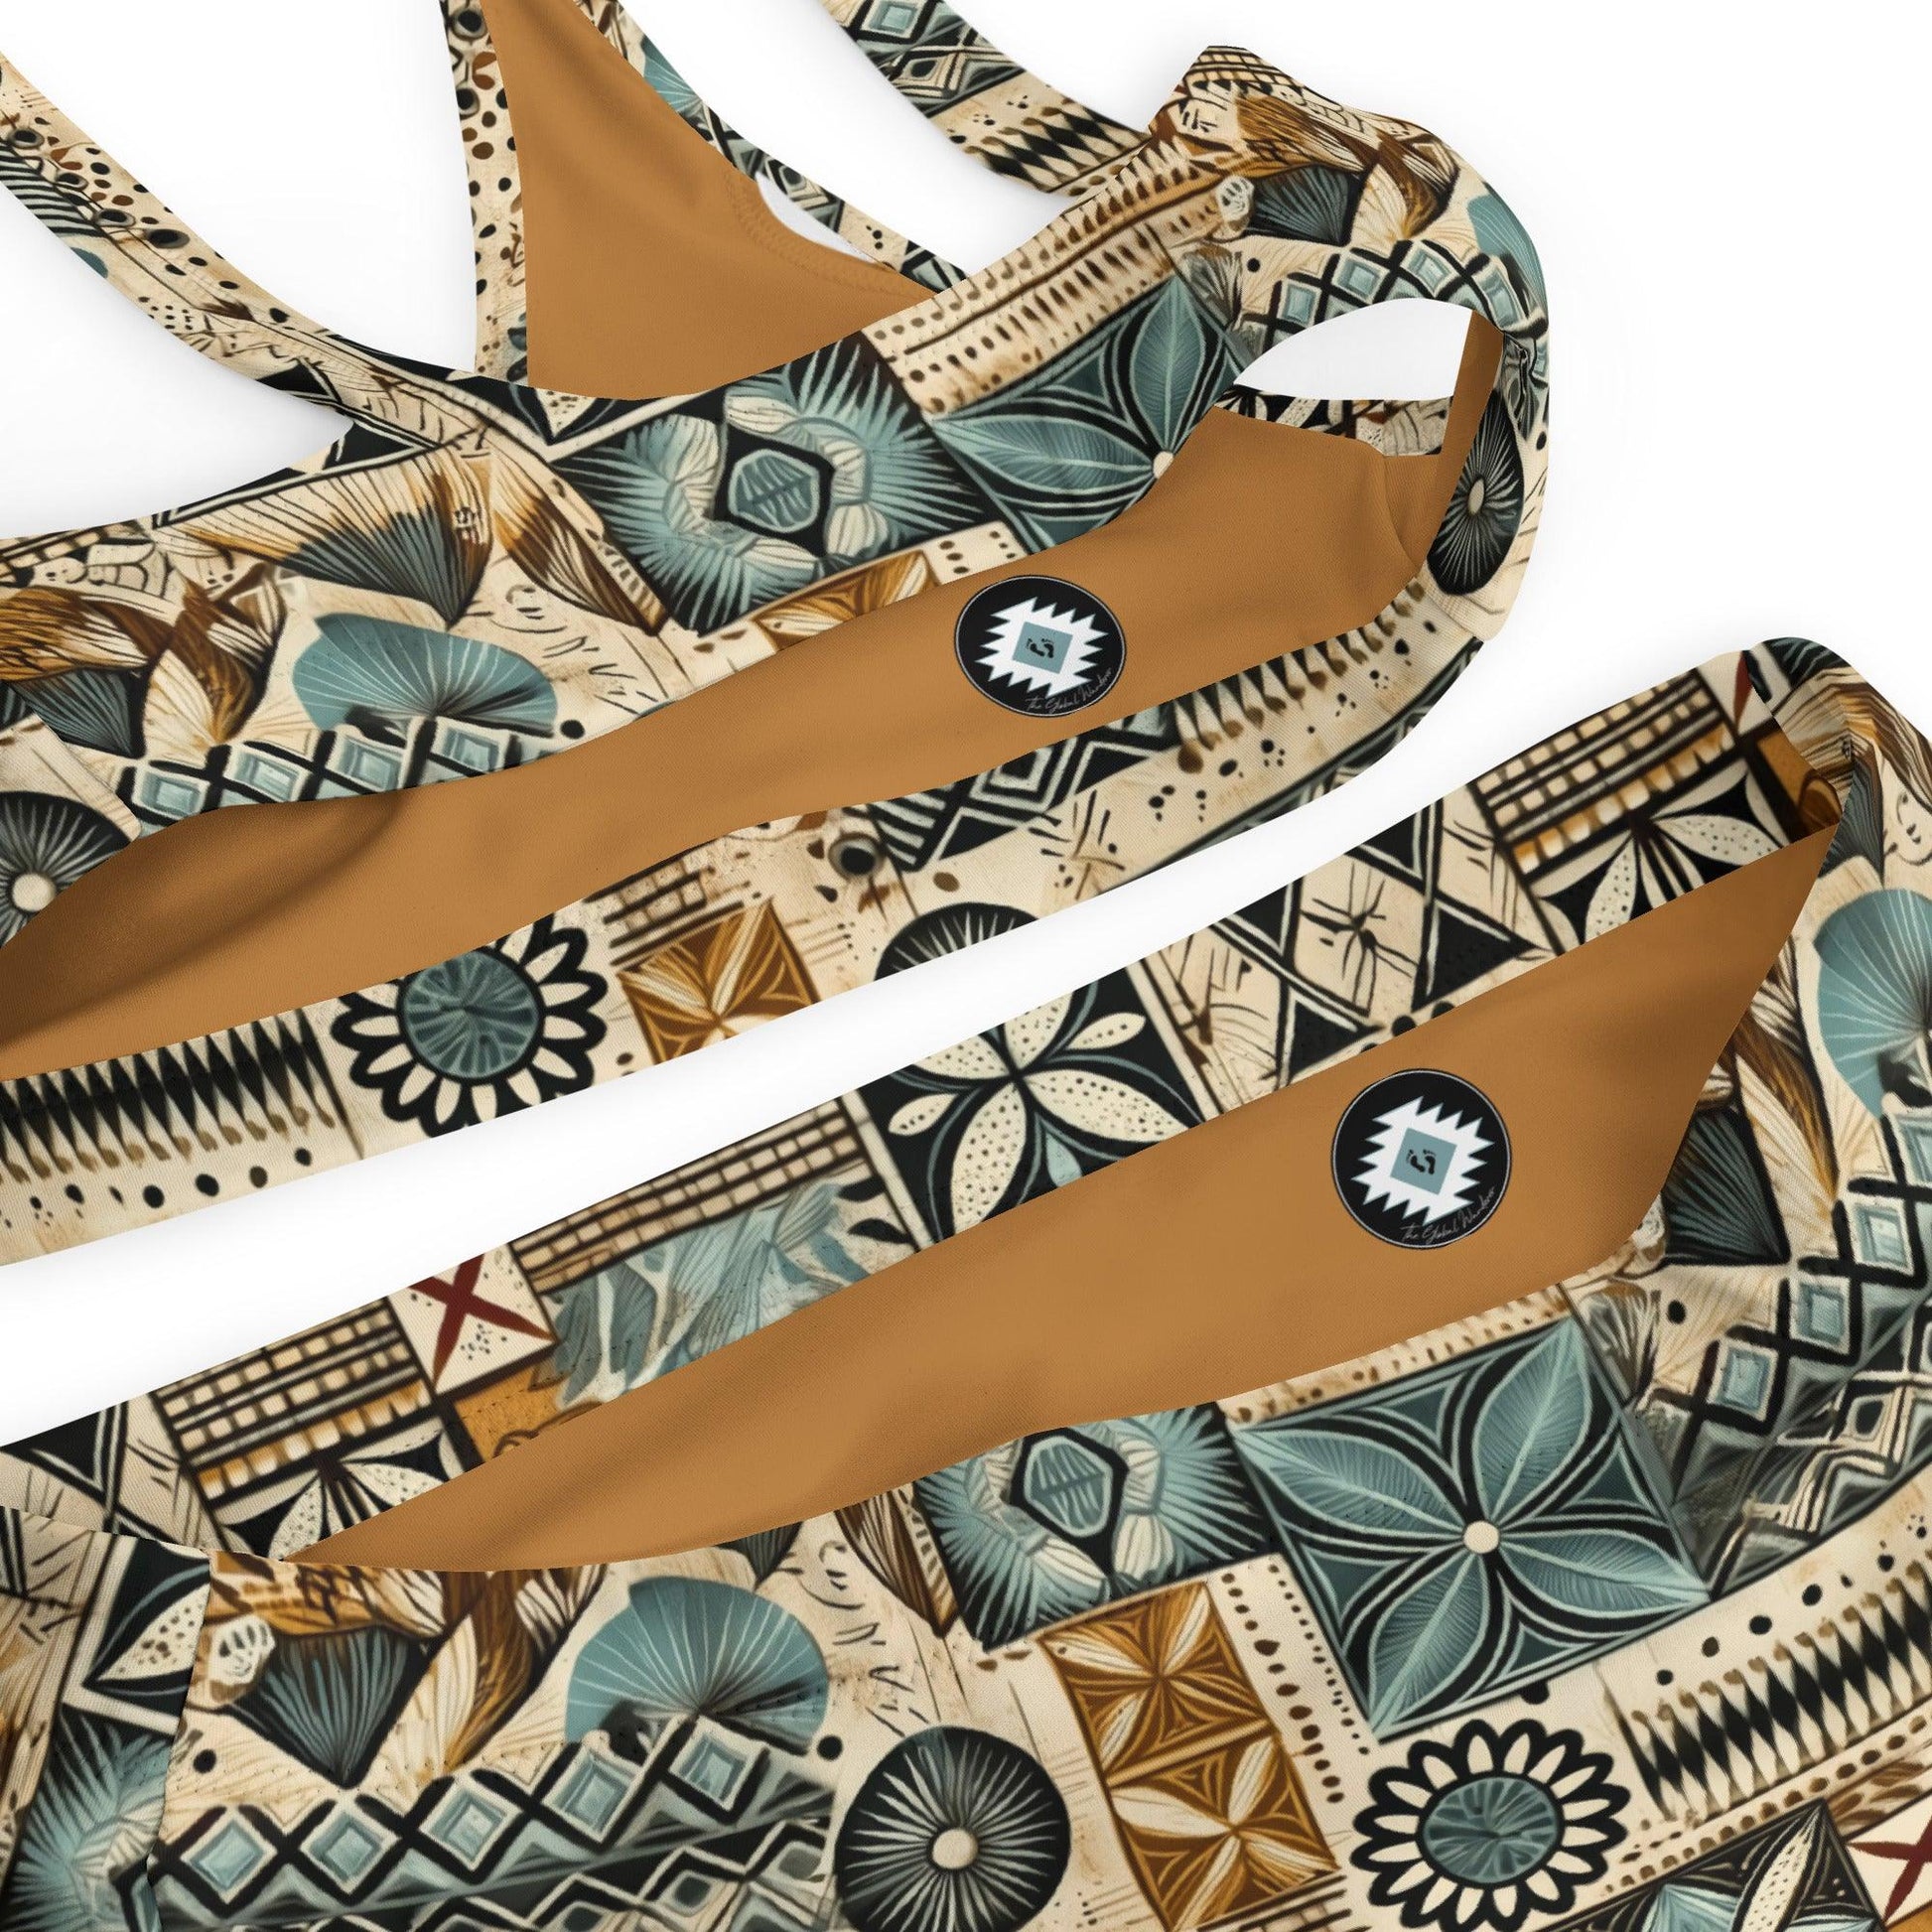 Pacific Islands Tapa Cloth Recycled High-Waisted Bikini - The Global Wanderer